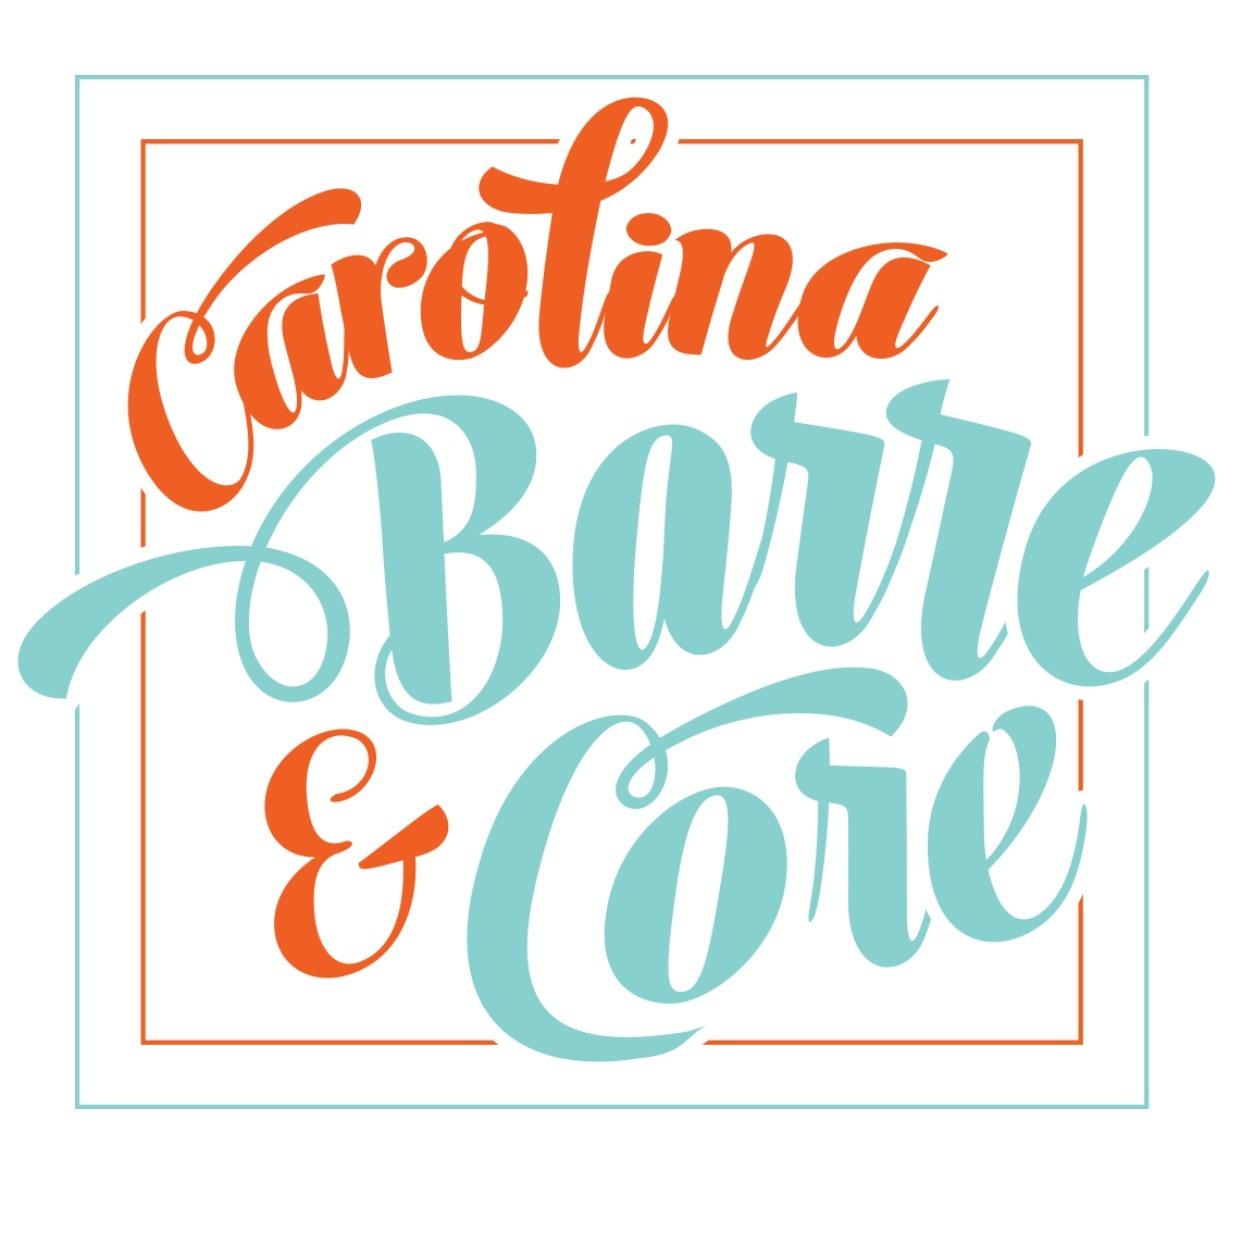 Carolina Barre & Core Charlotte Logo